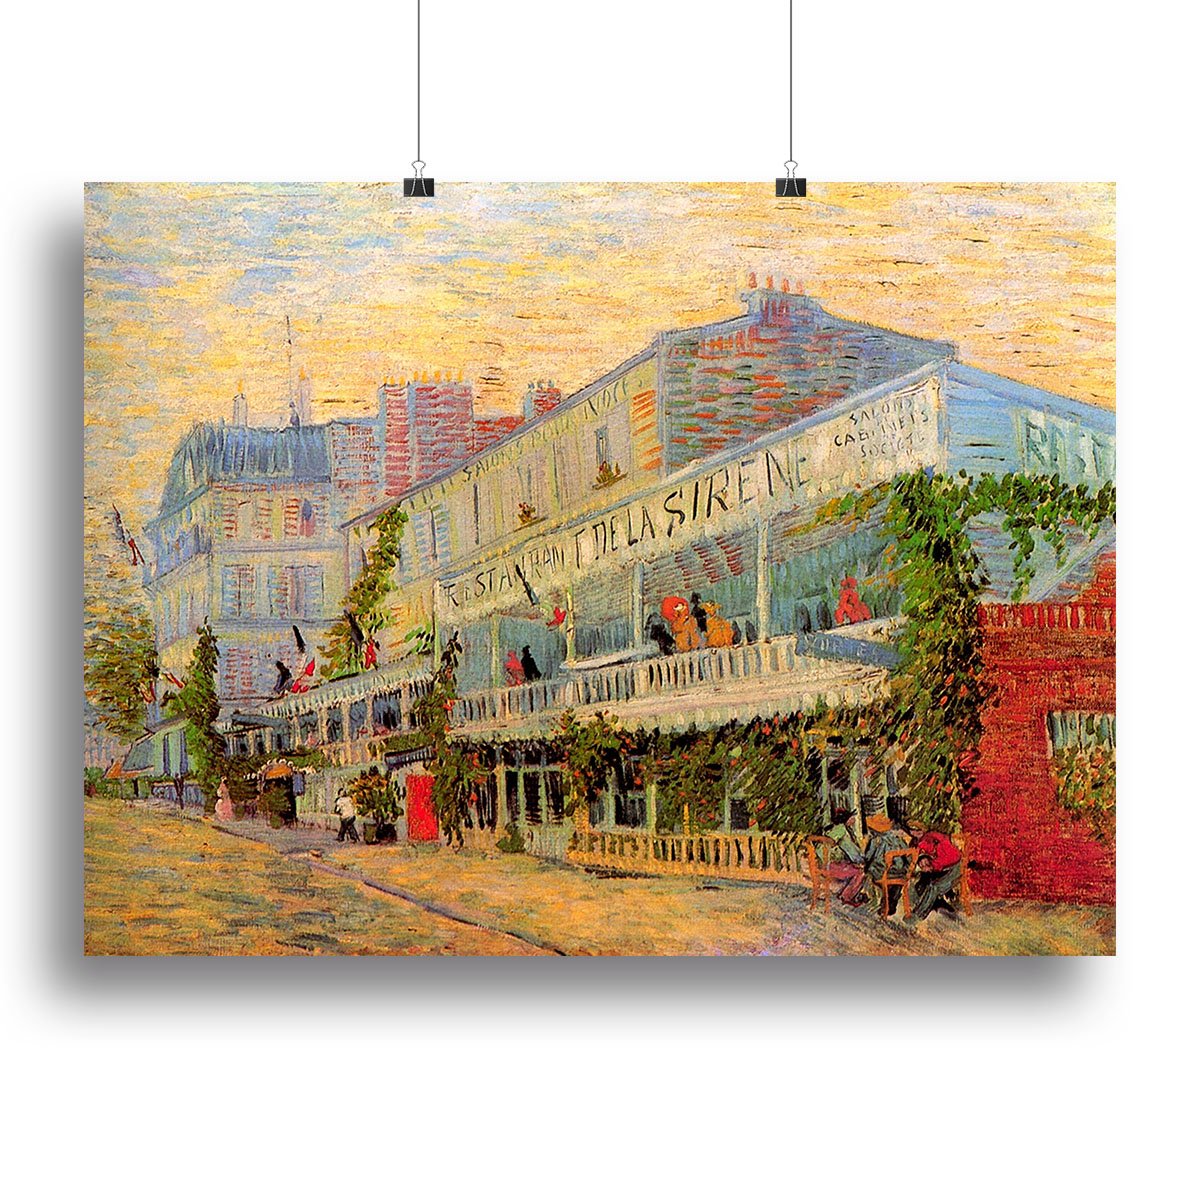 Restaurant de la Sirene at Asnieres by Van Gogh Canvas Print or Poster